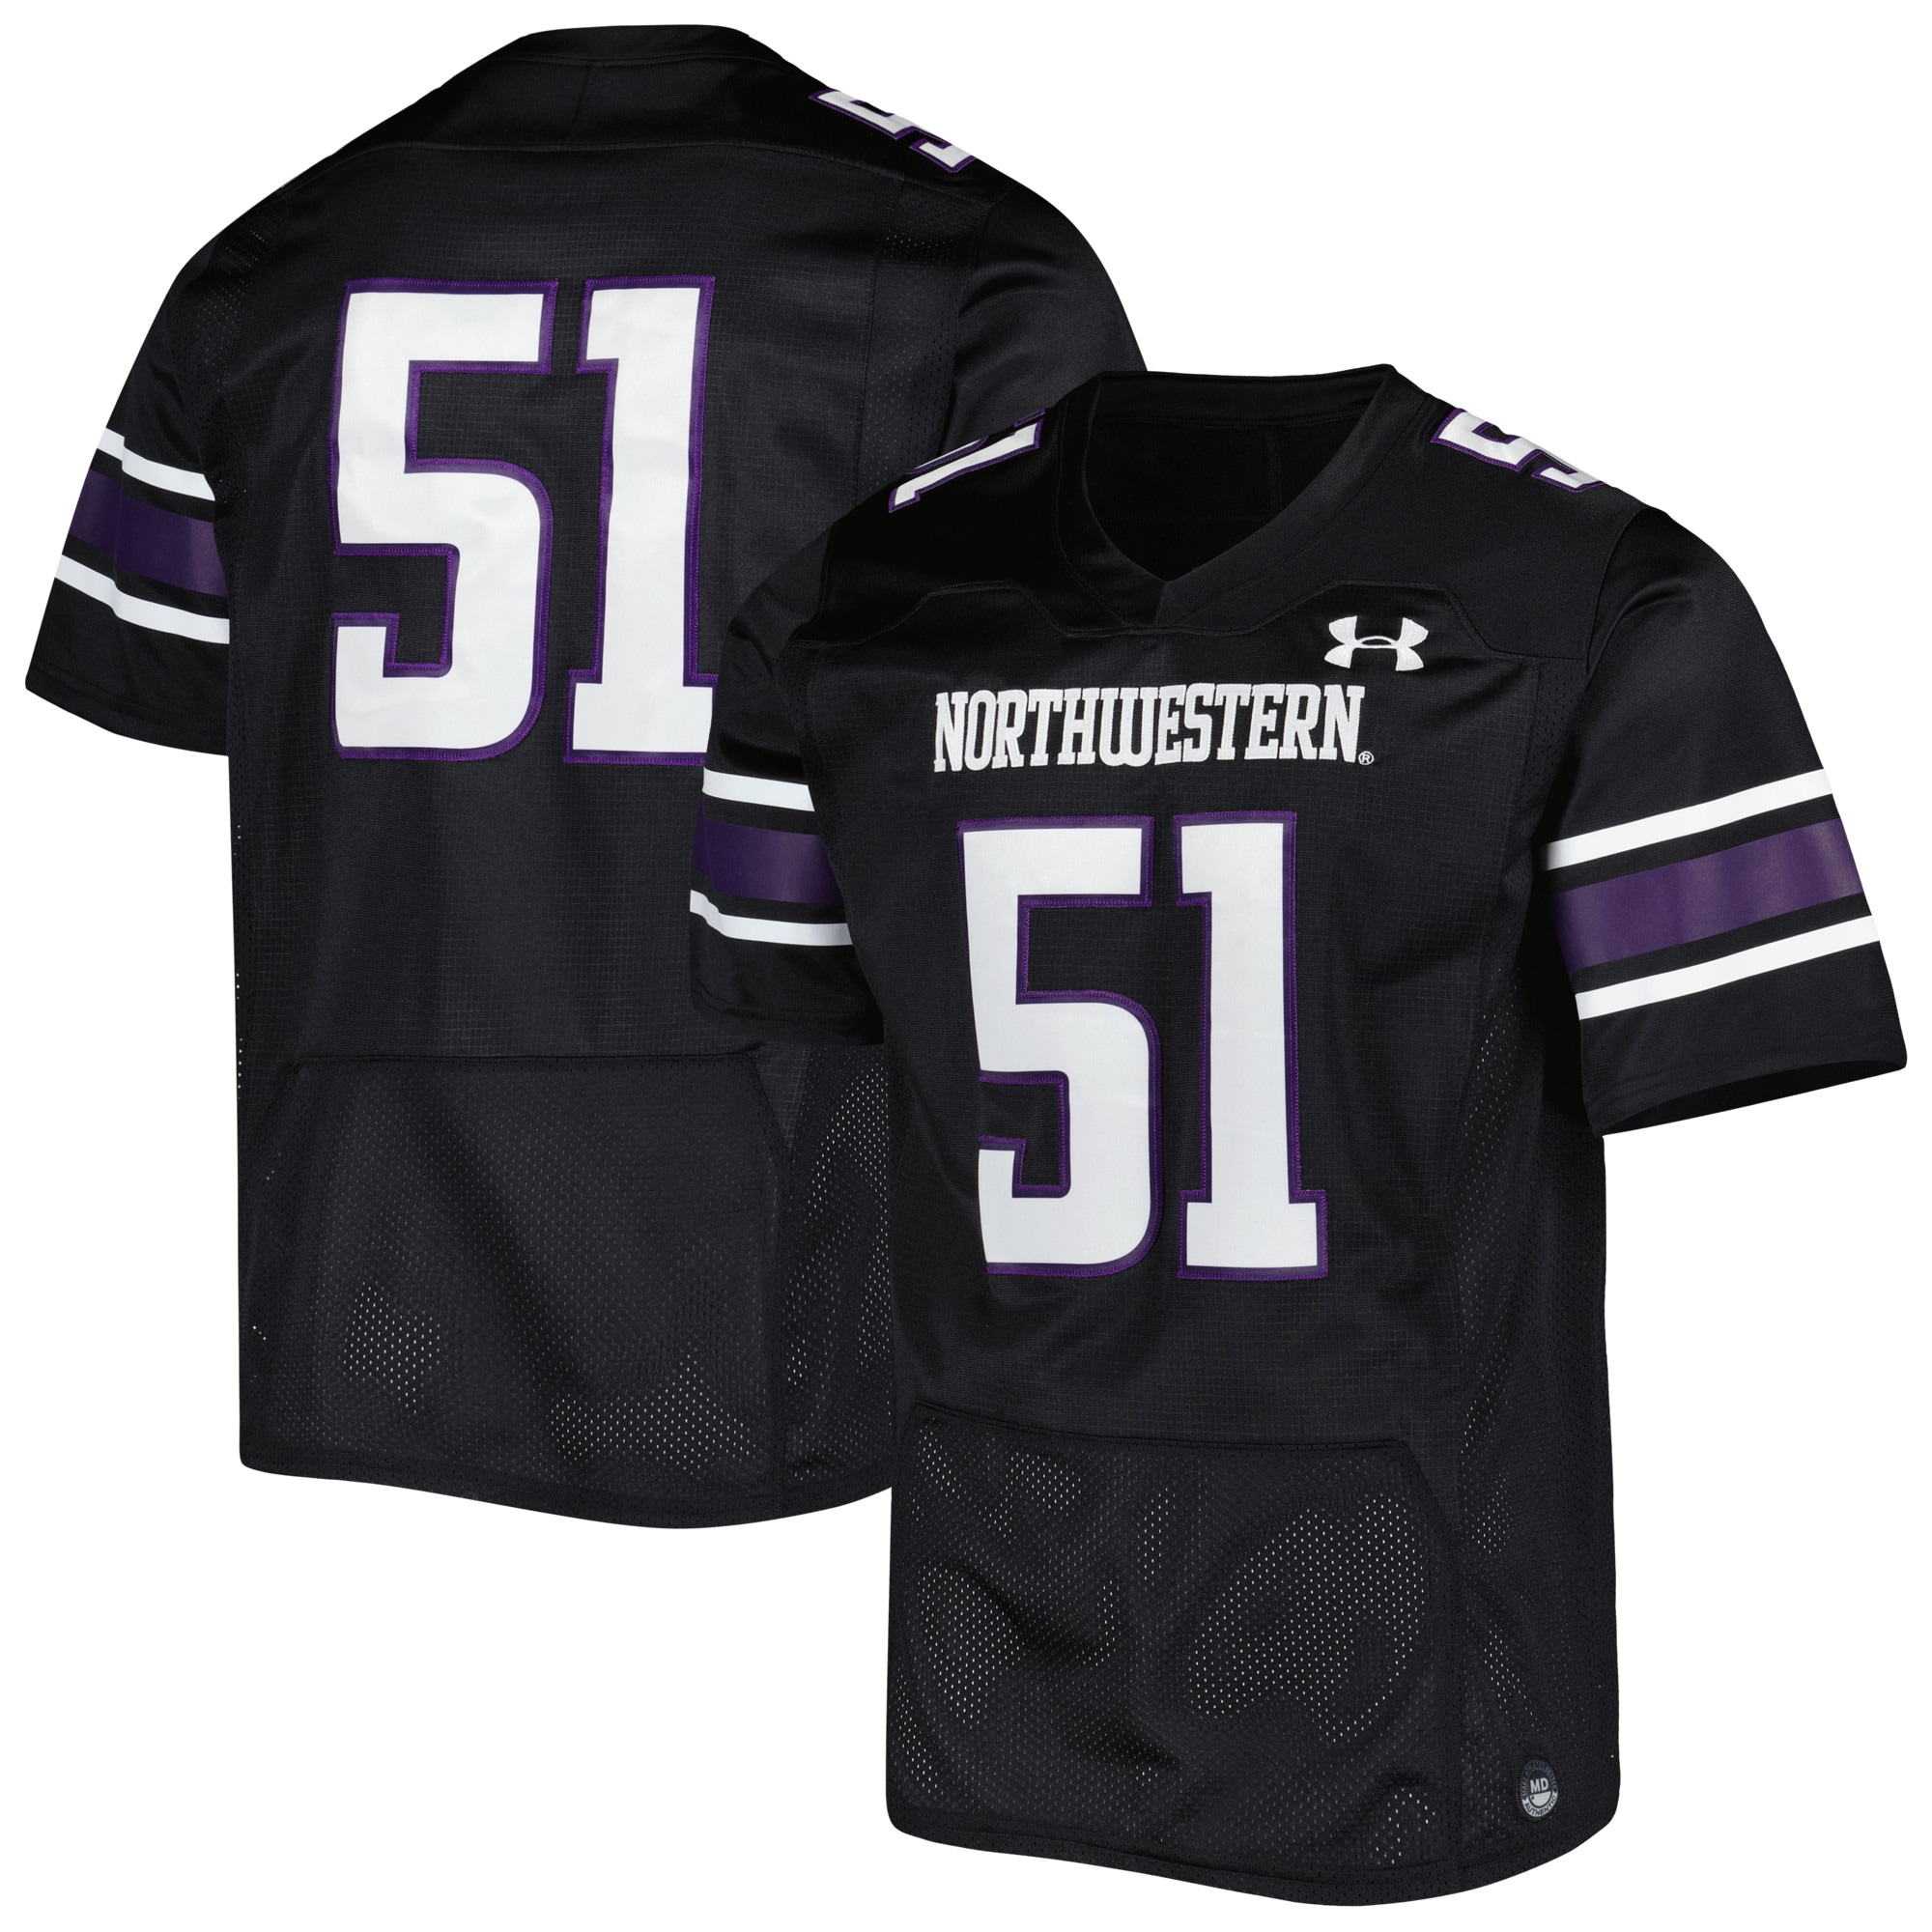 #51 Northwestern Wildcats Under Armour Premier Limited Jersey - Black For Youth Women Men